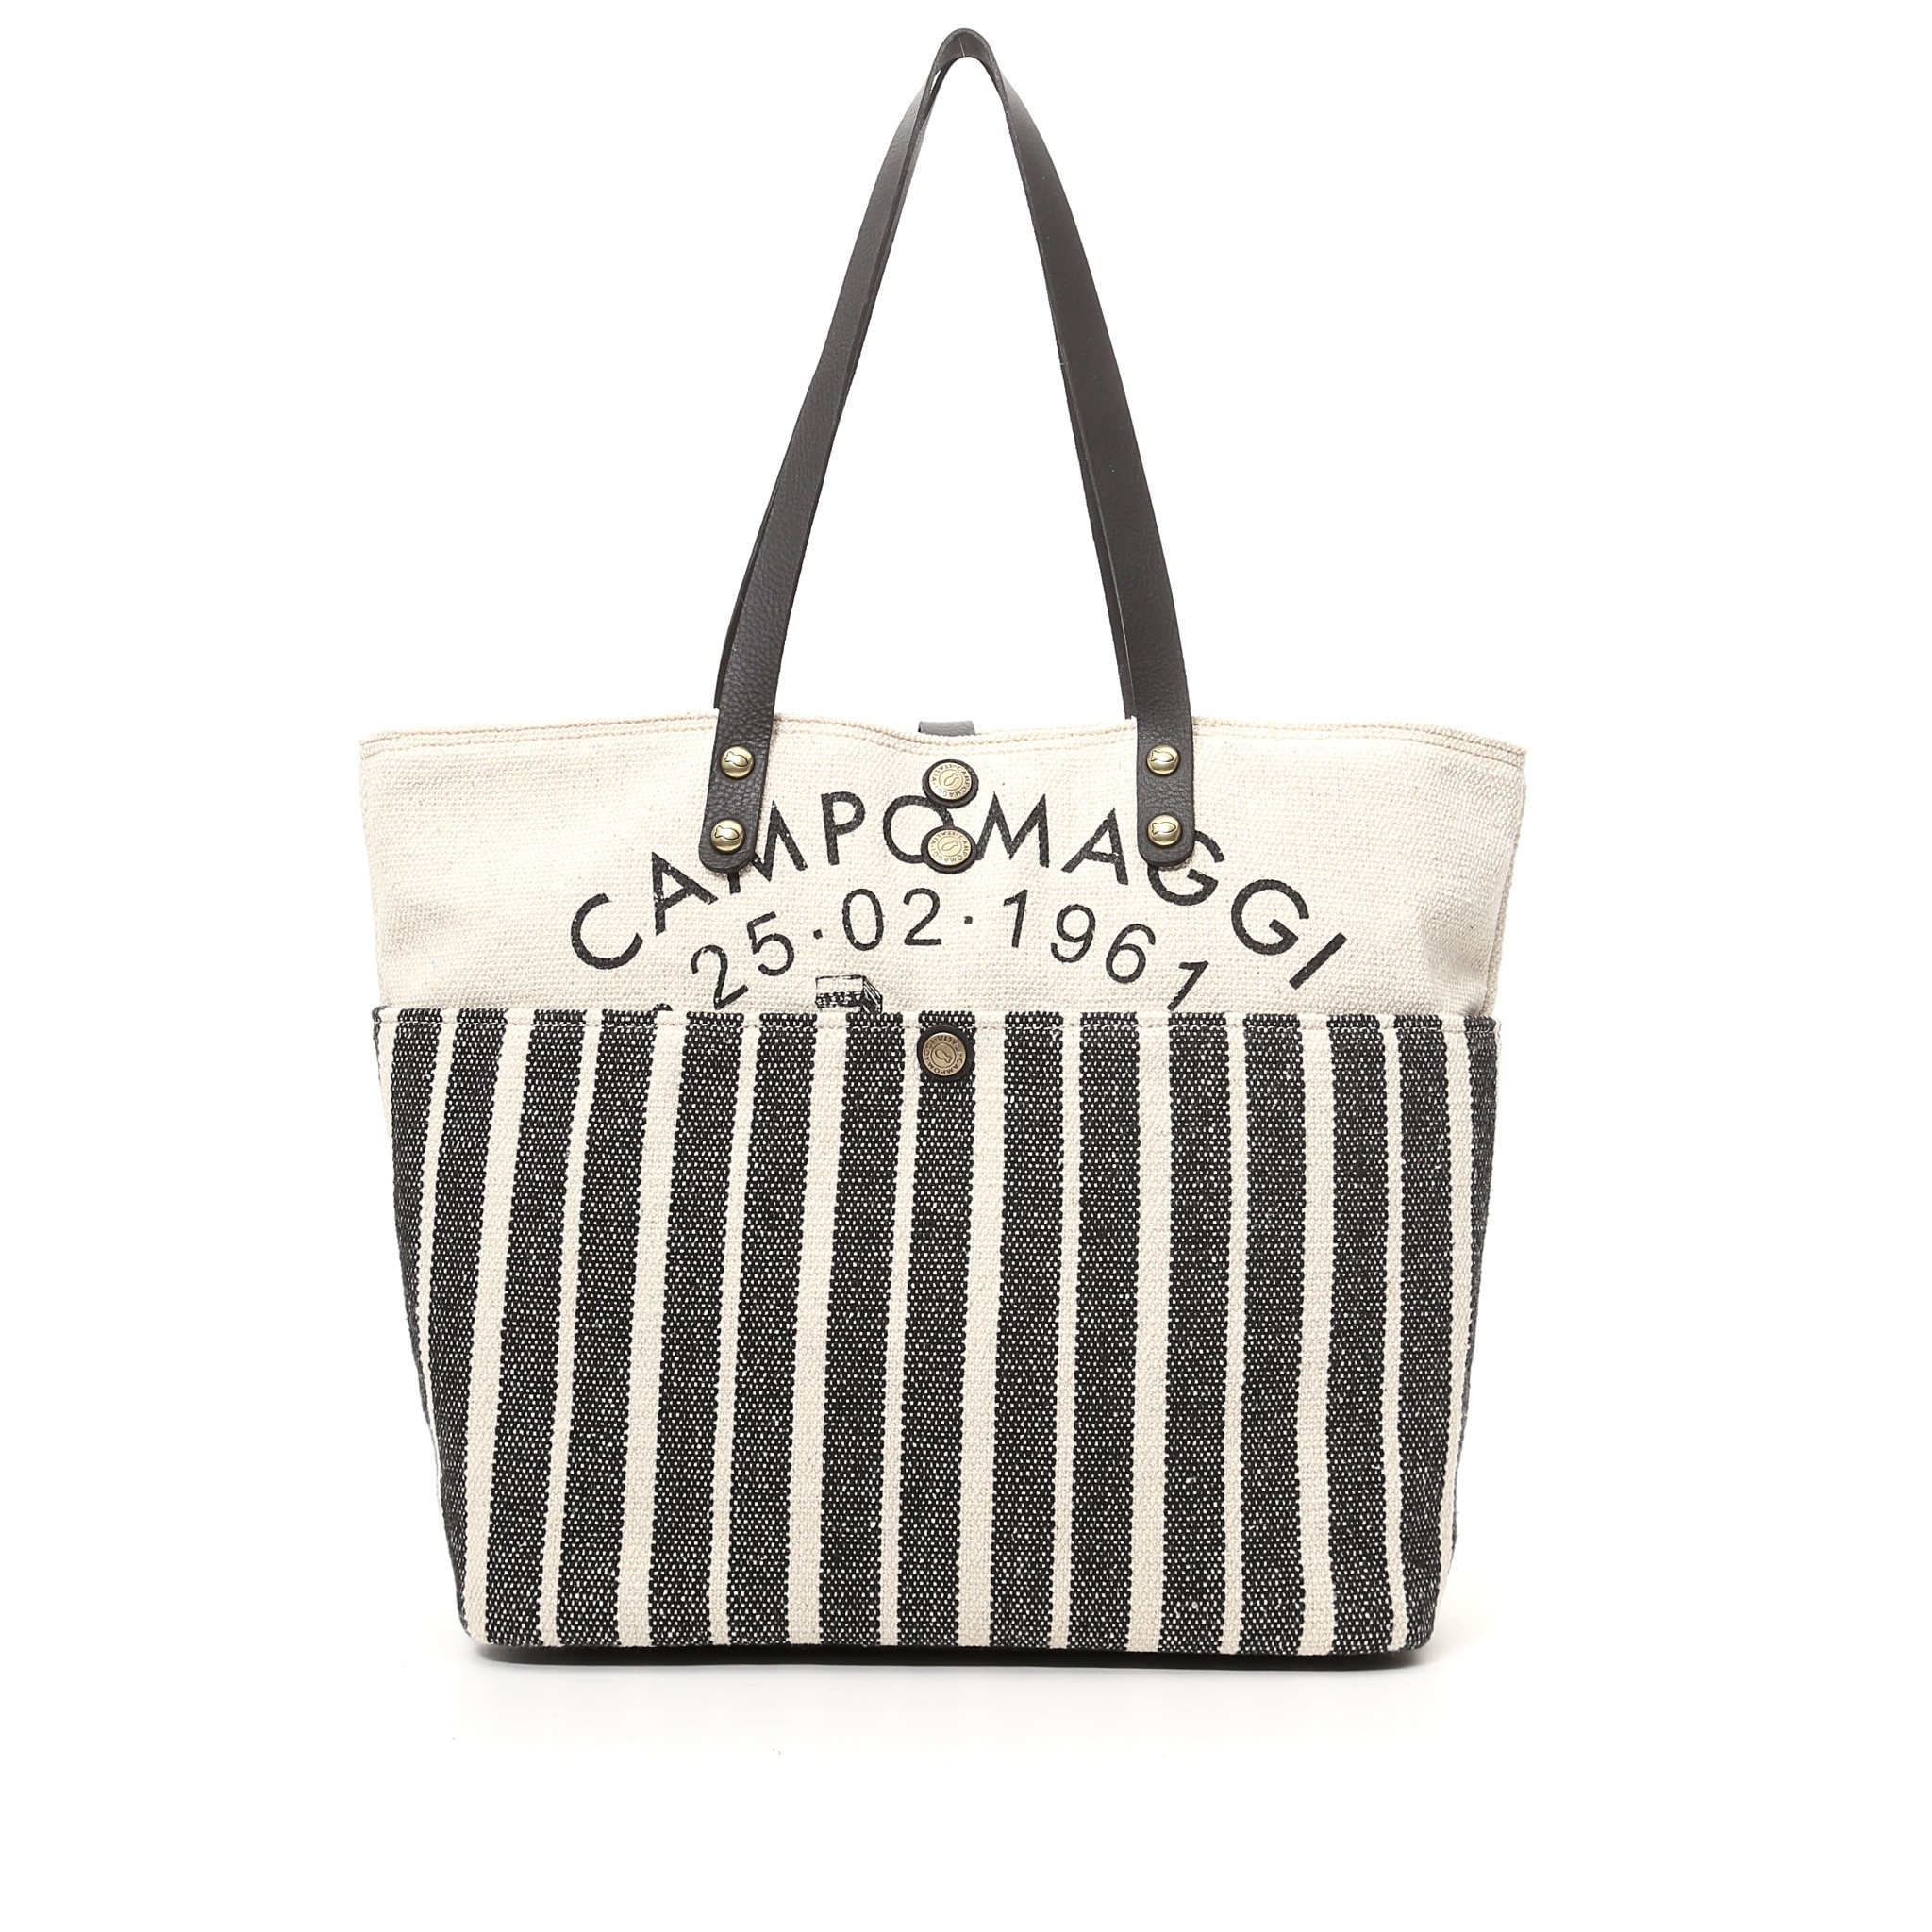 Campomaggi Shopping bag with striped cotton & Teodorano print